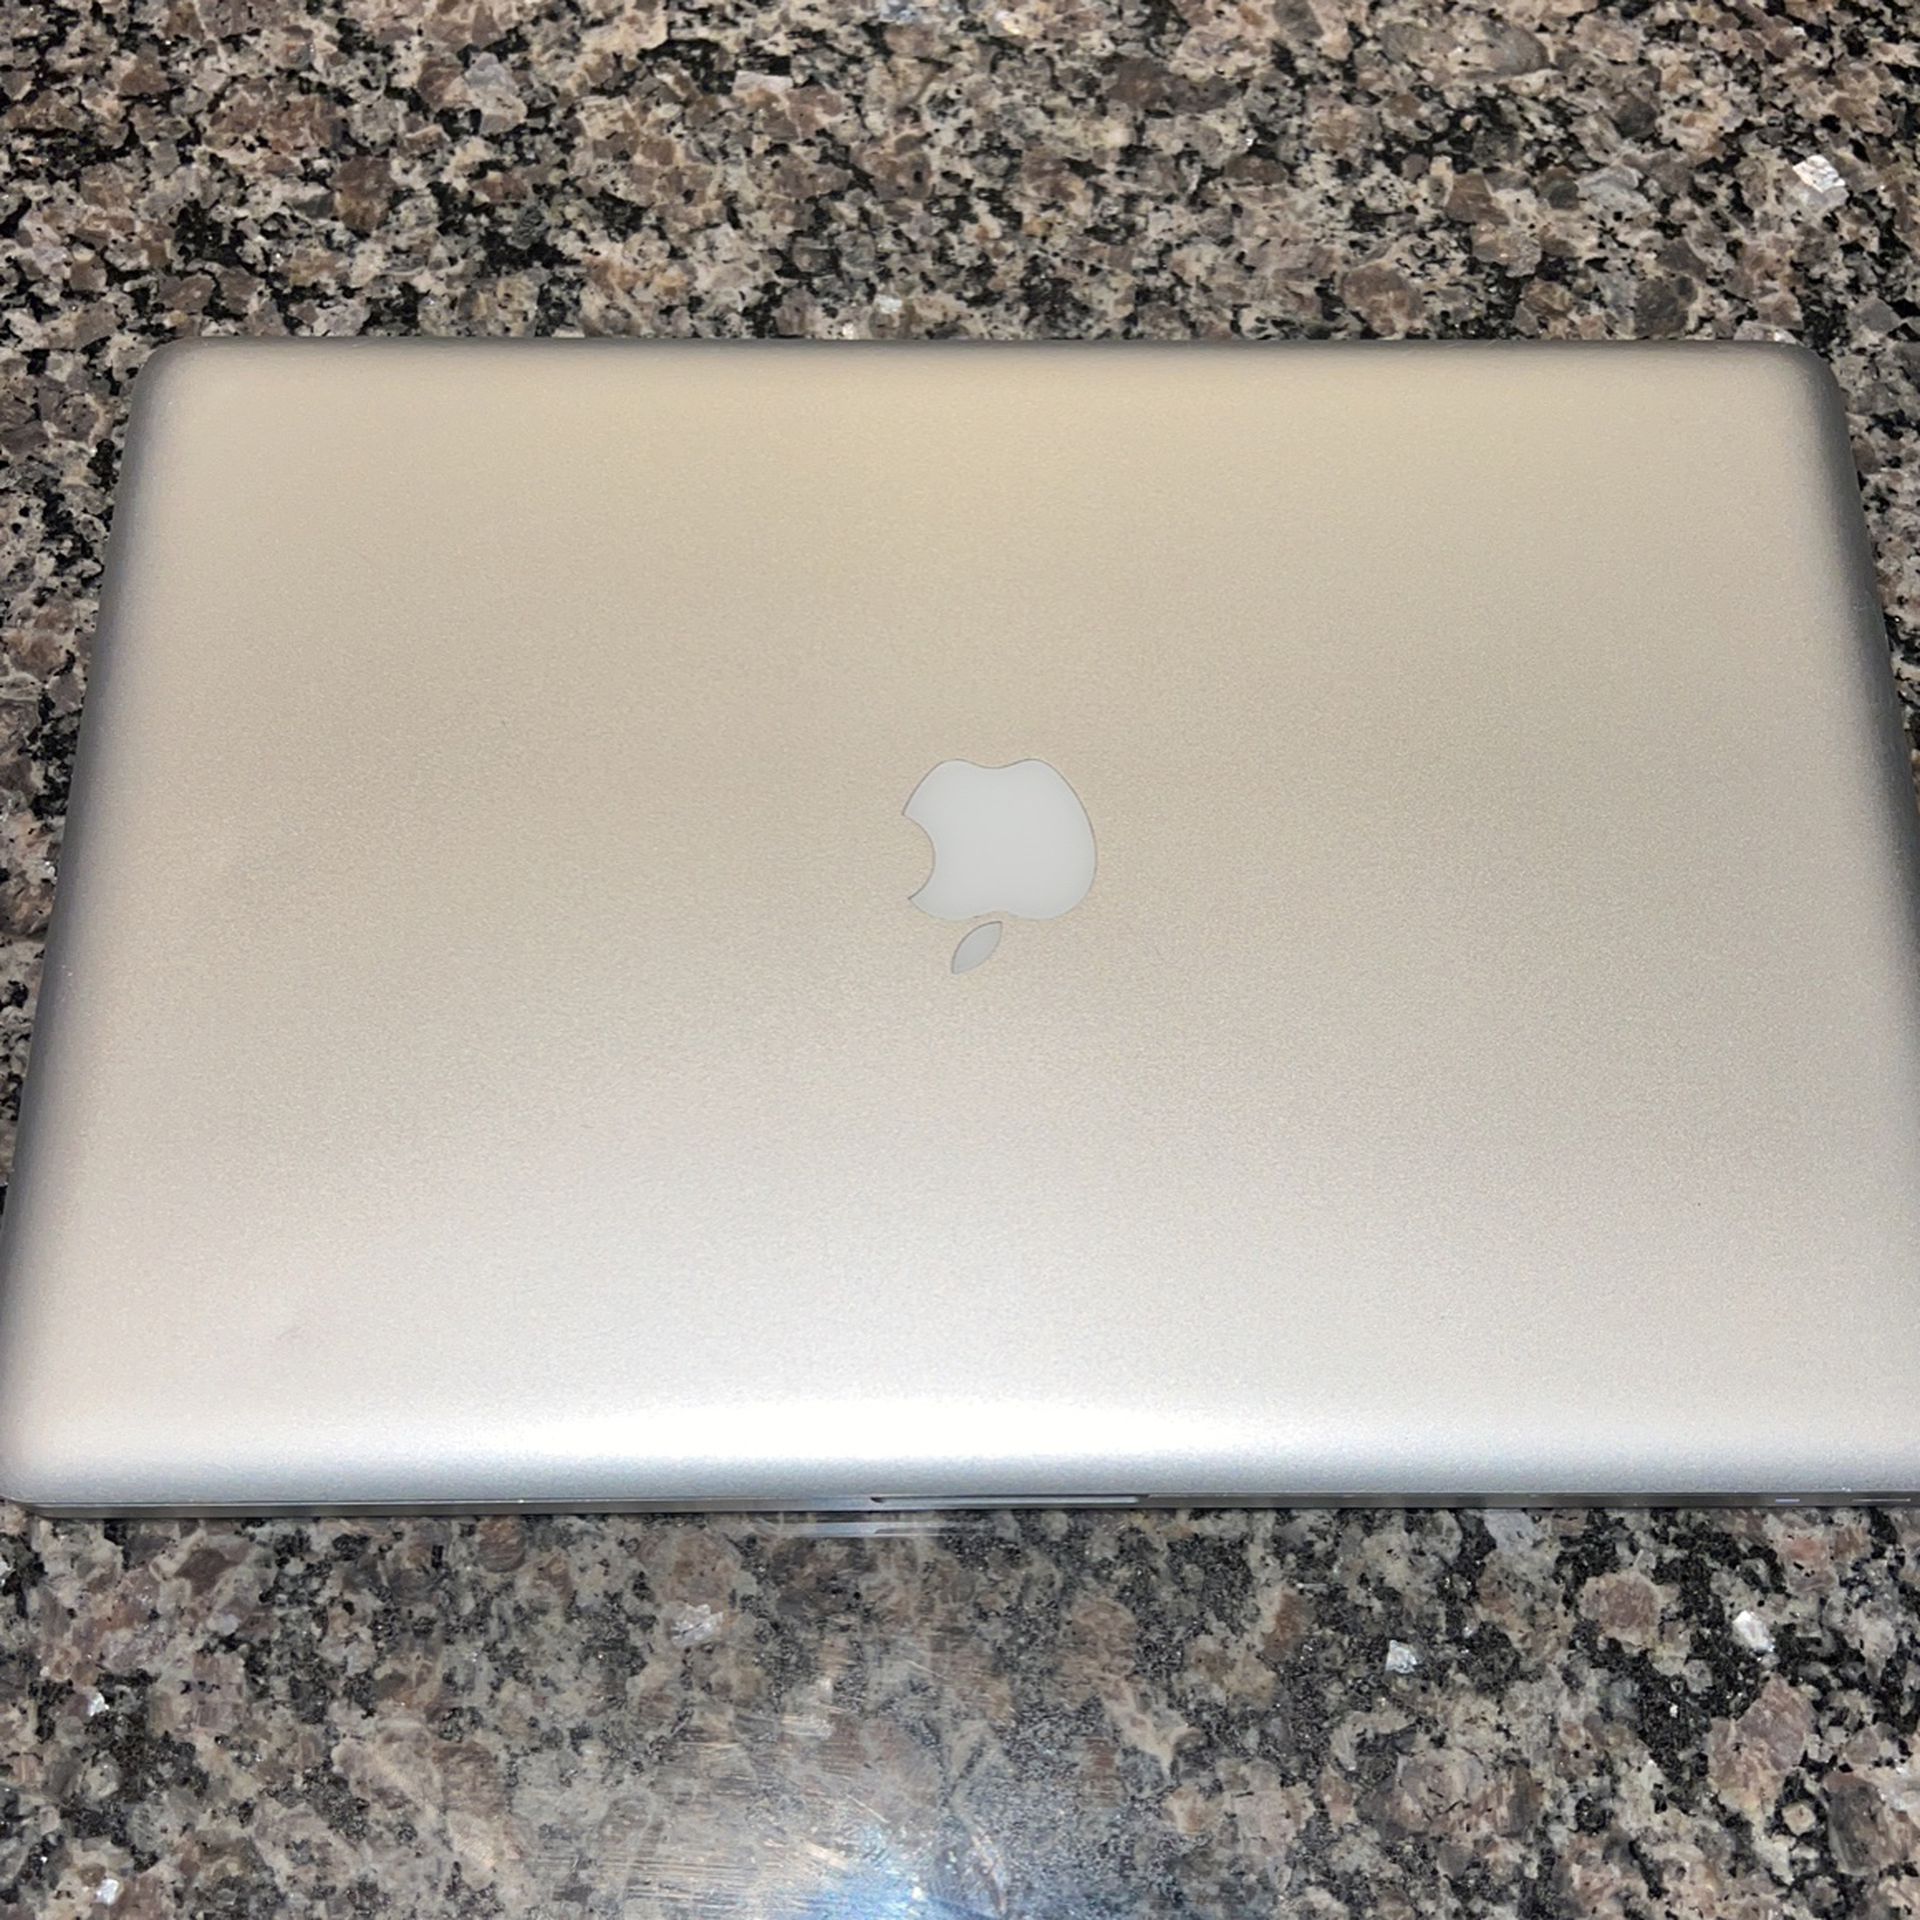 MacBook Pro 15 Inch Mid 2012 